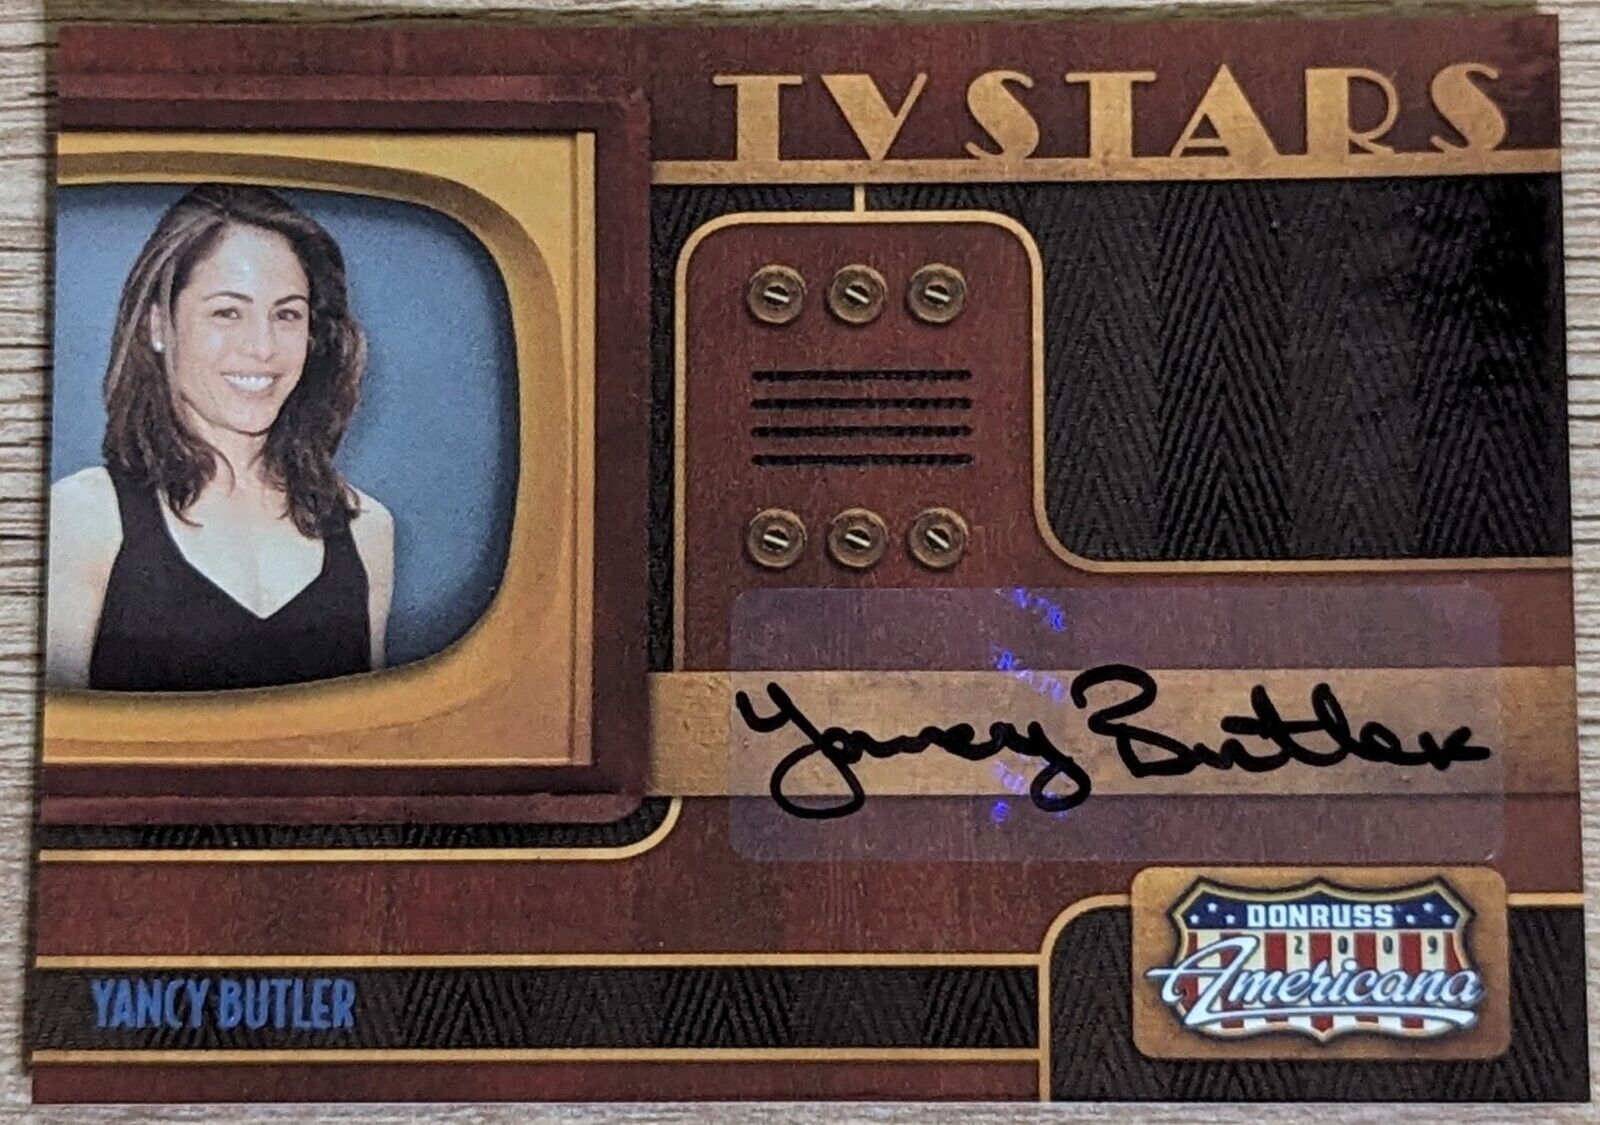 2009 Donruss Americana TV Stars Yancy Butler Autograph Card 05/25